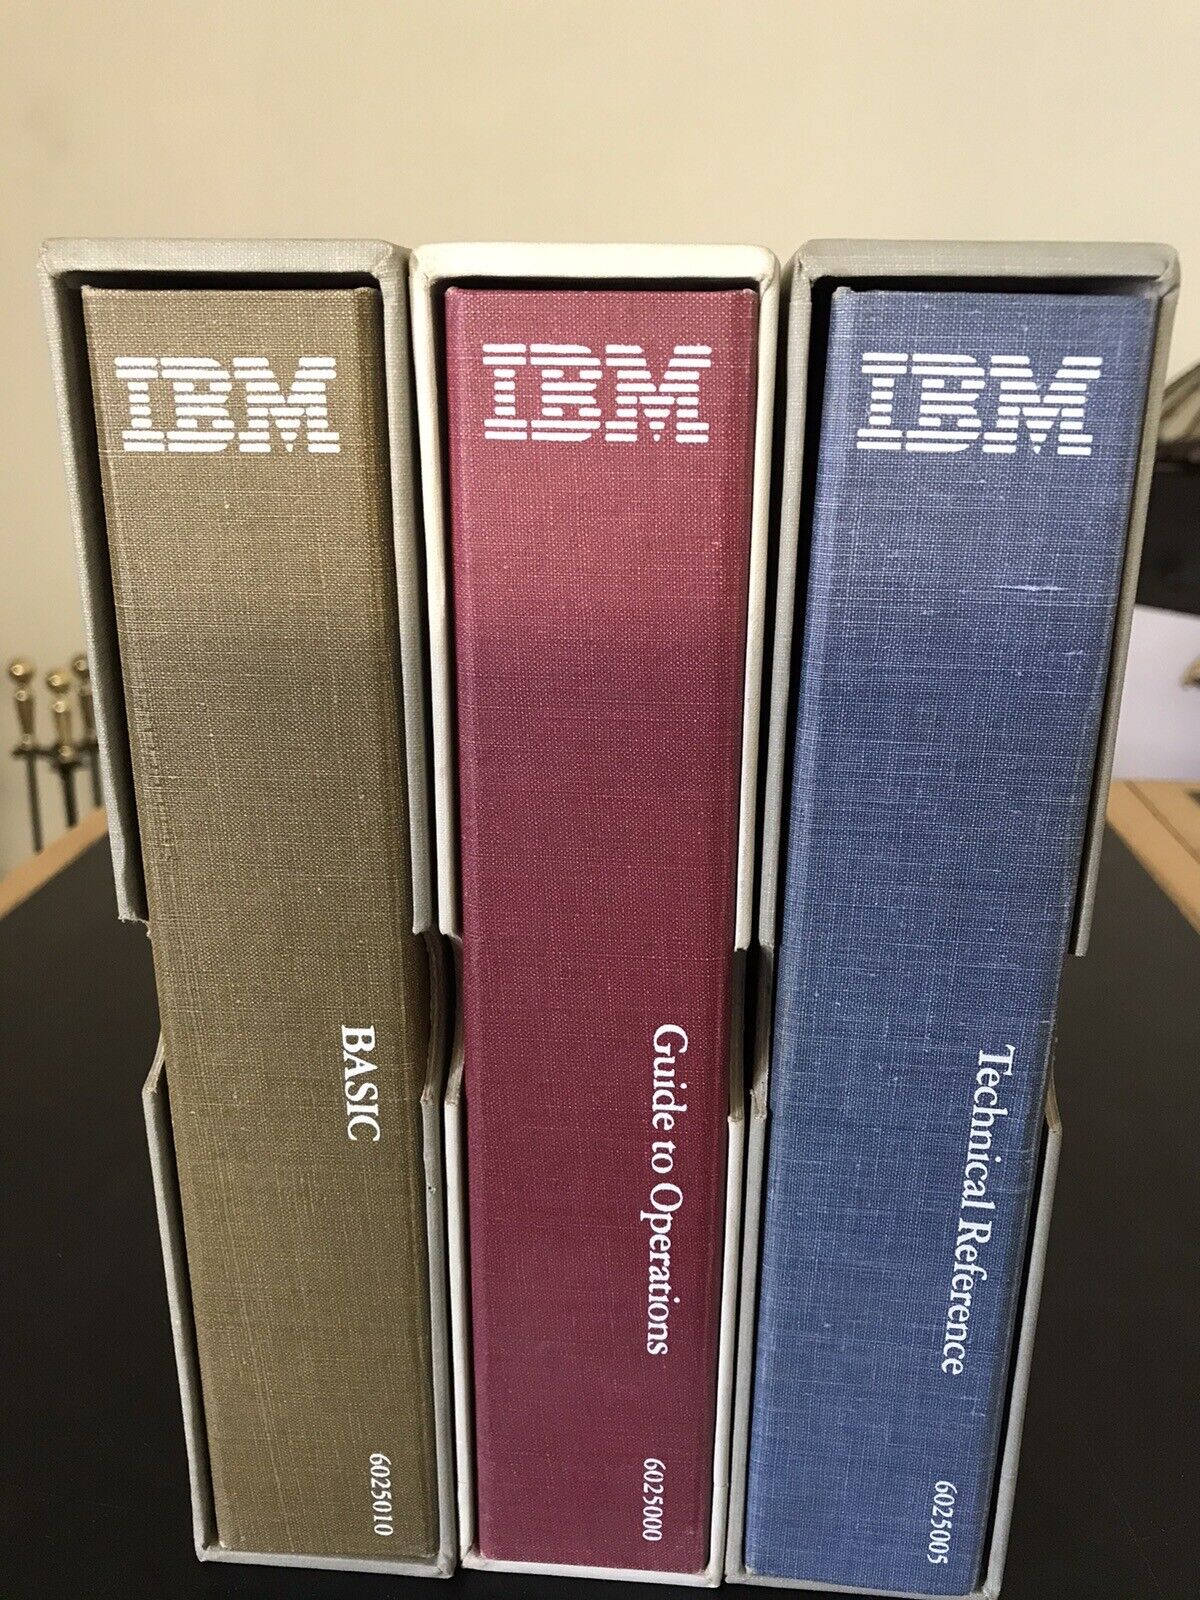 IBM Personal Computer Manuals Set Of 3 - Vintage